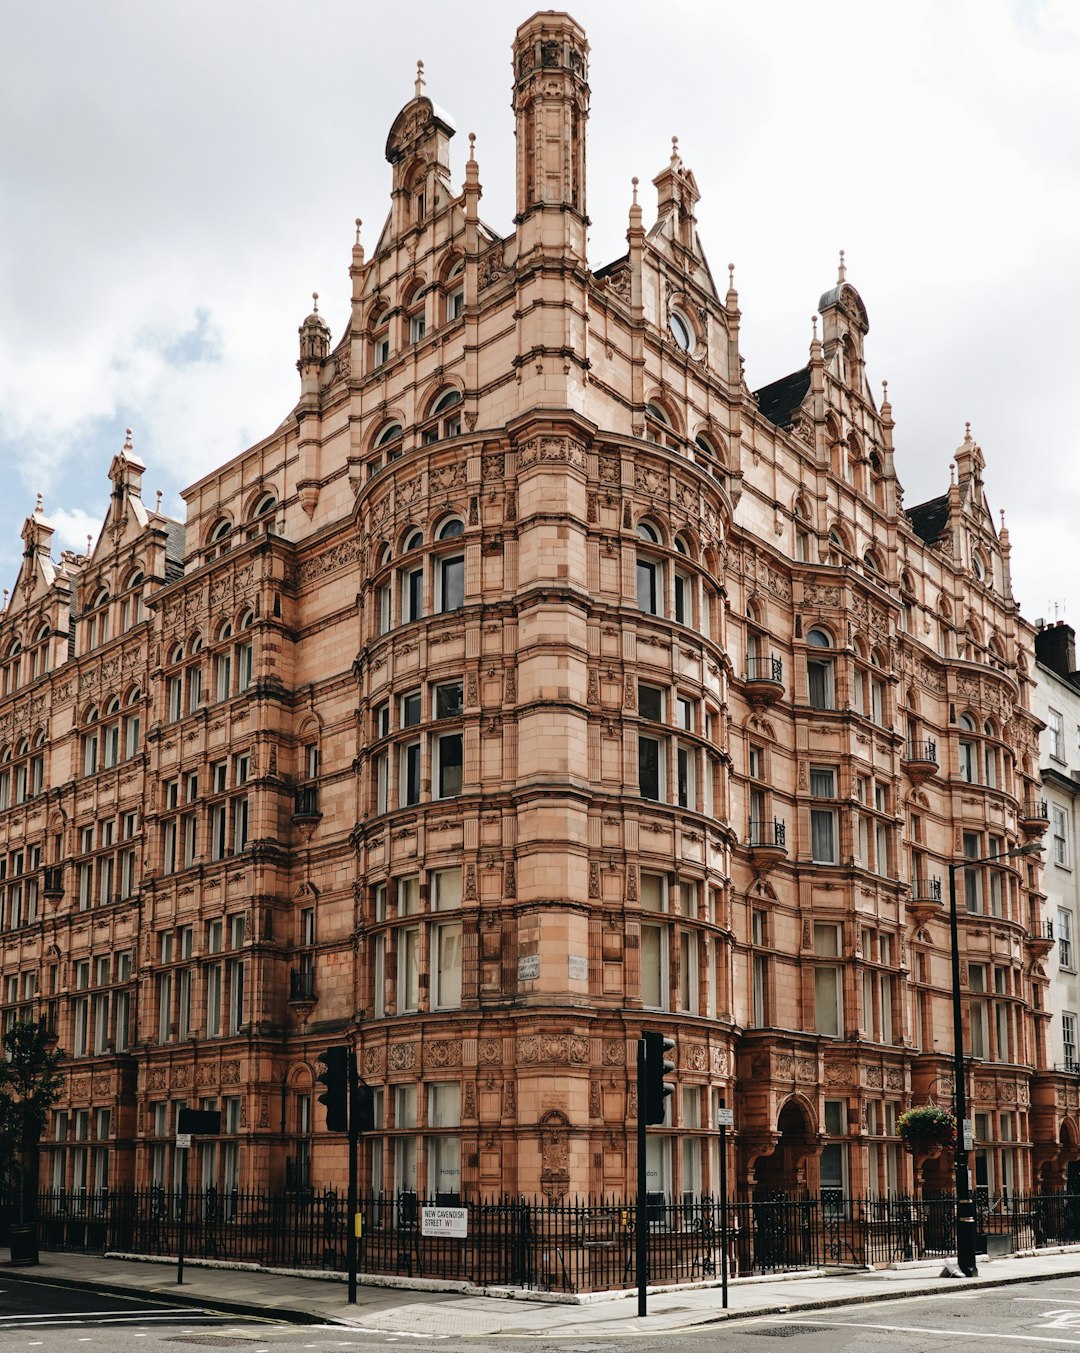 Marylebone's Buildings - From New Cavendish Wimpole Street, United Kingdom